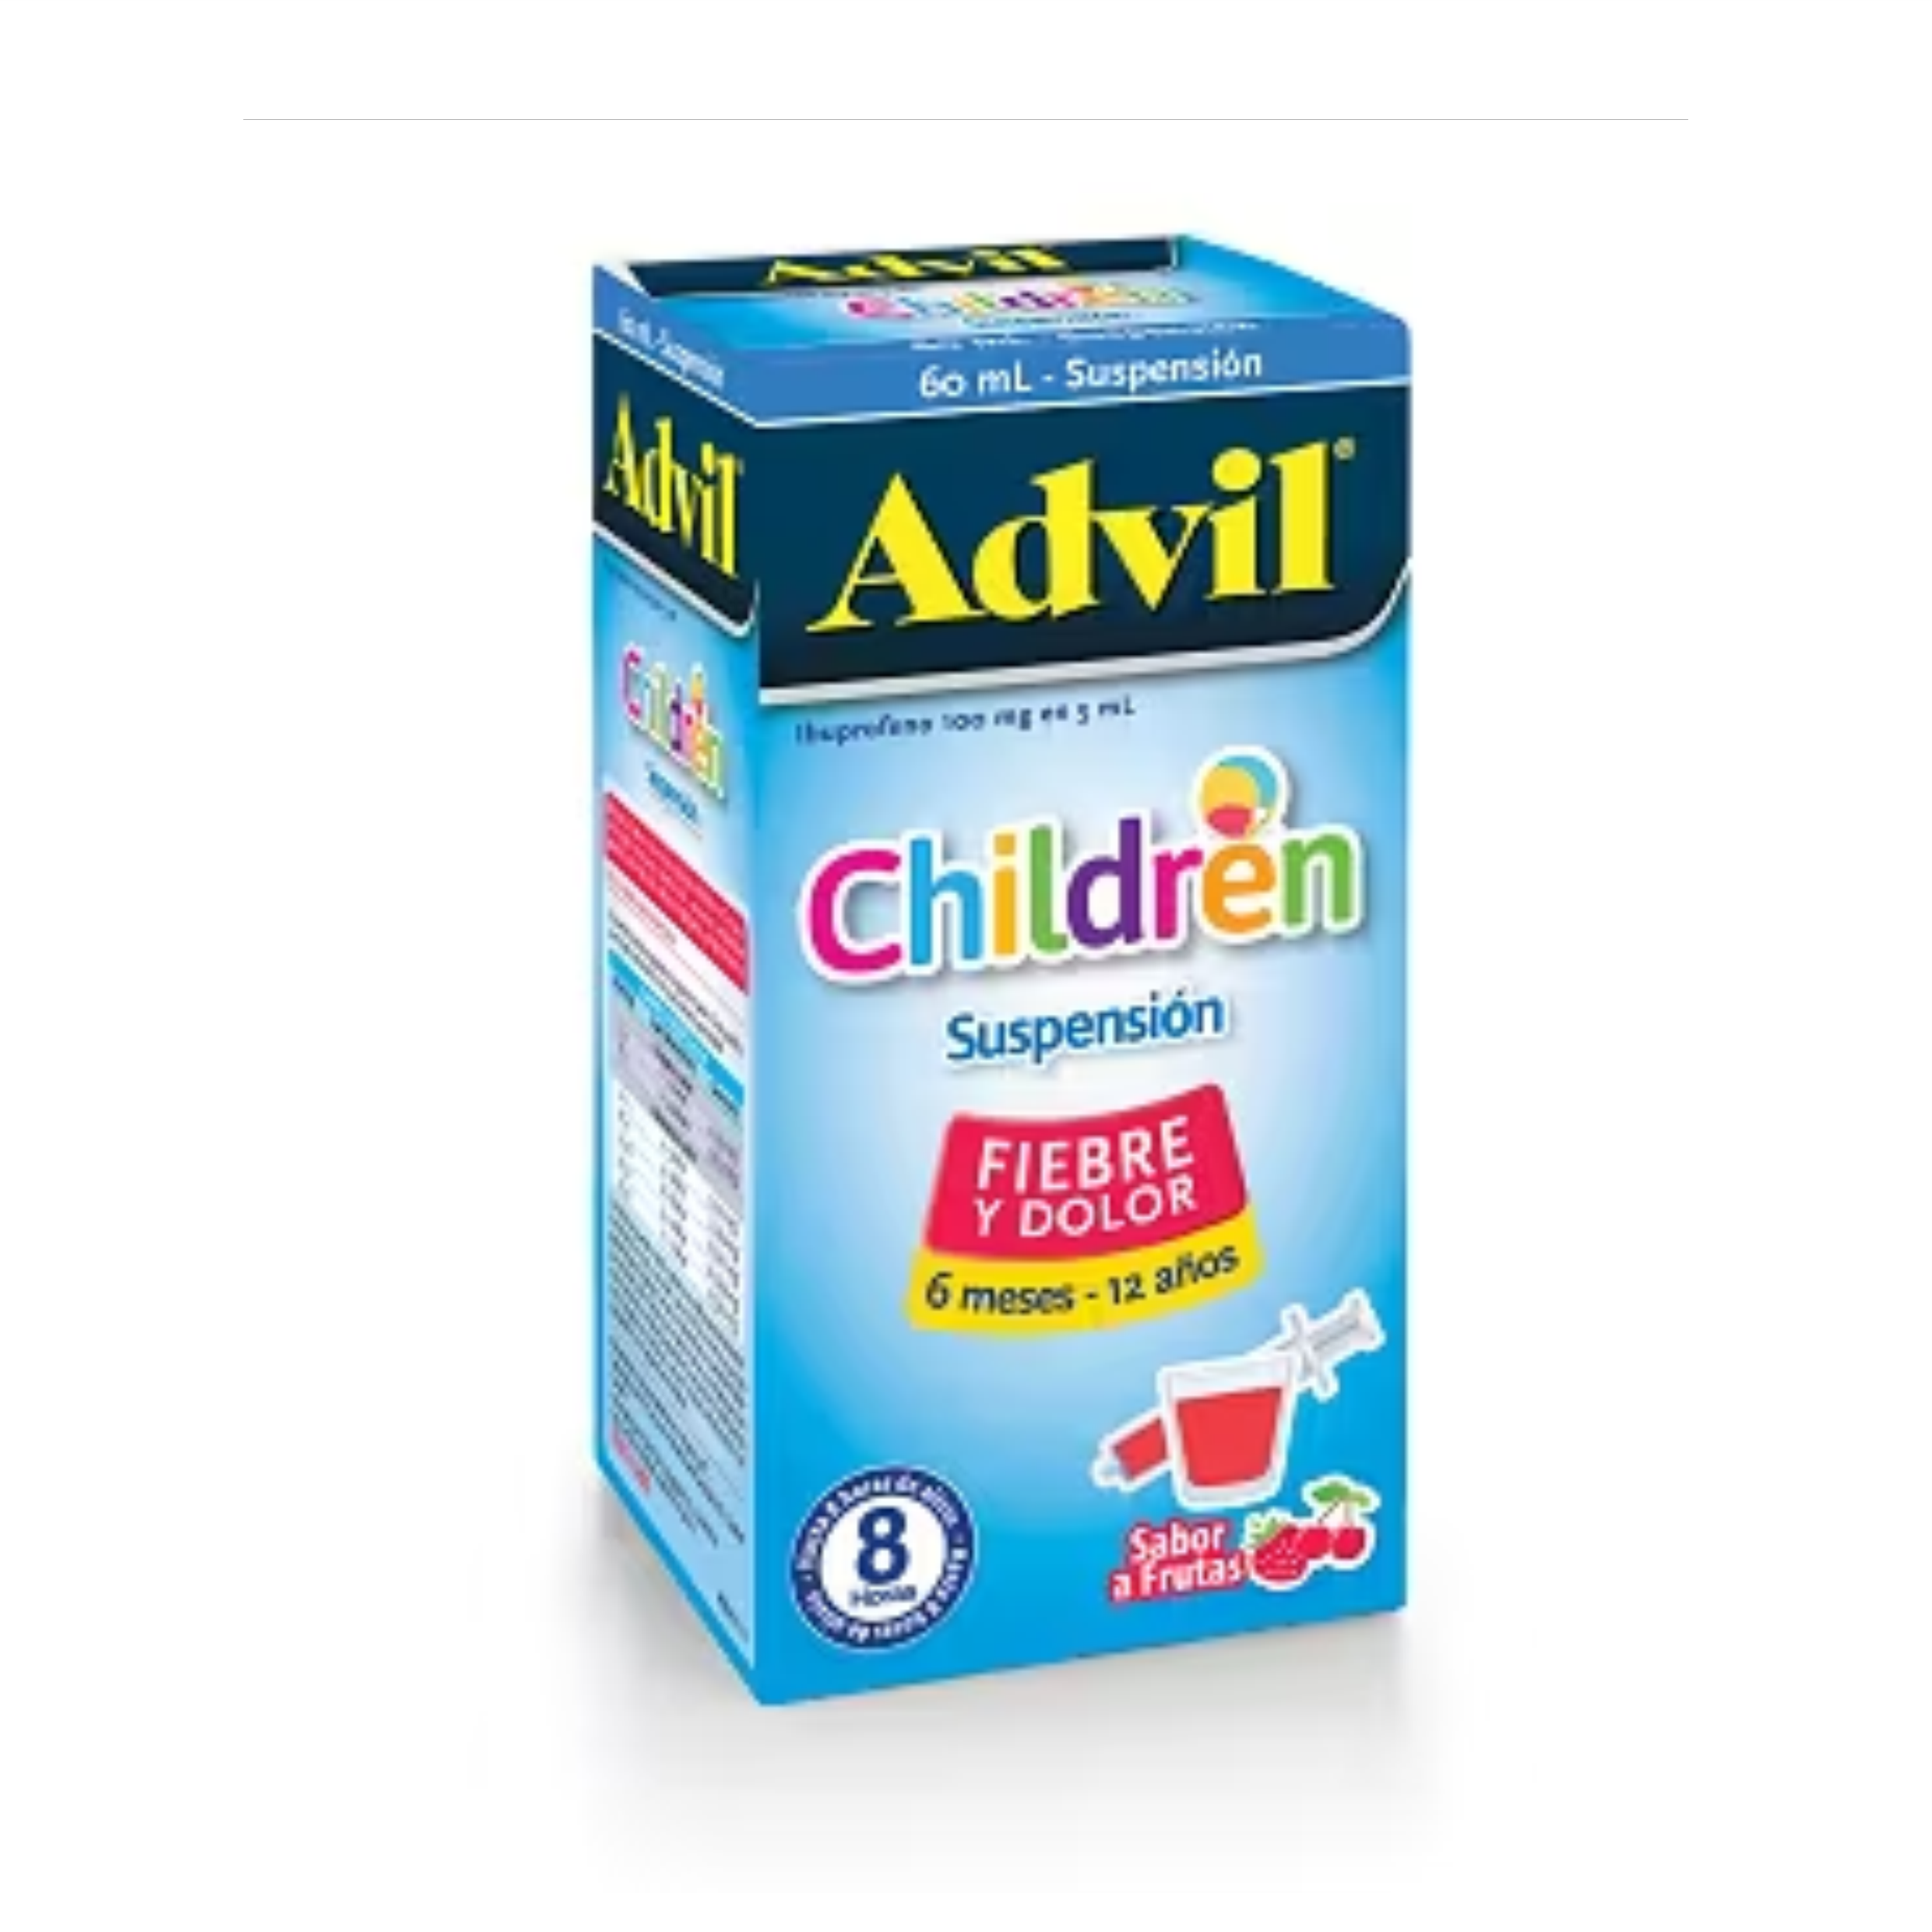 Advil Children Suspensión 60 mL